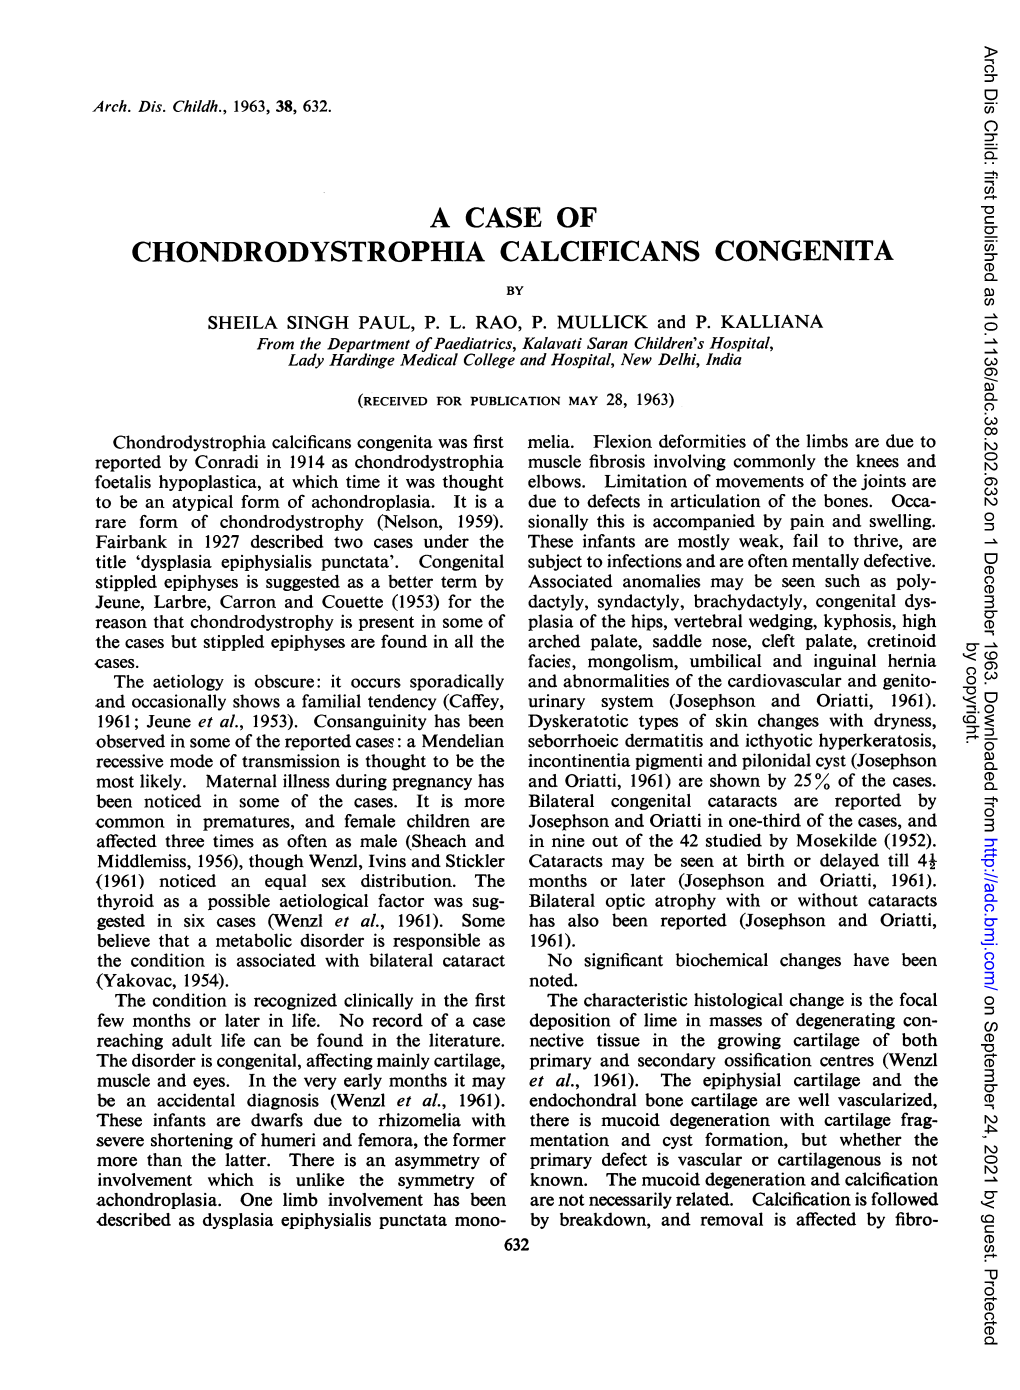 A Case of Chondrodystrophia Calcificans Congenita